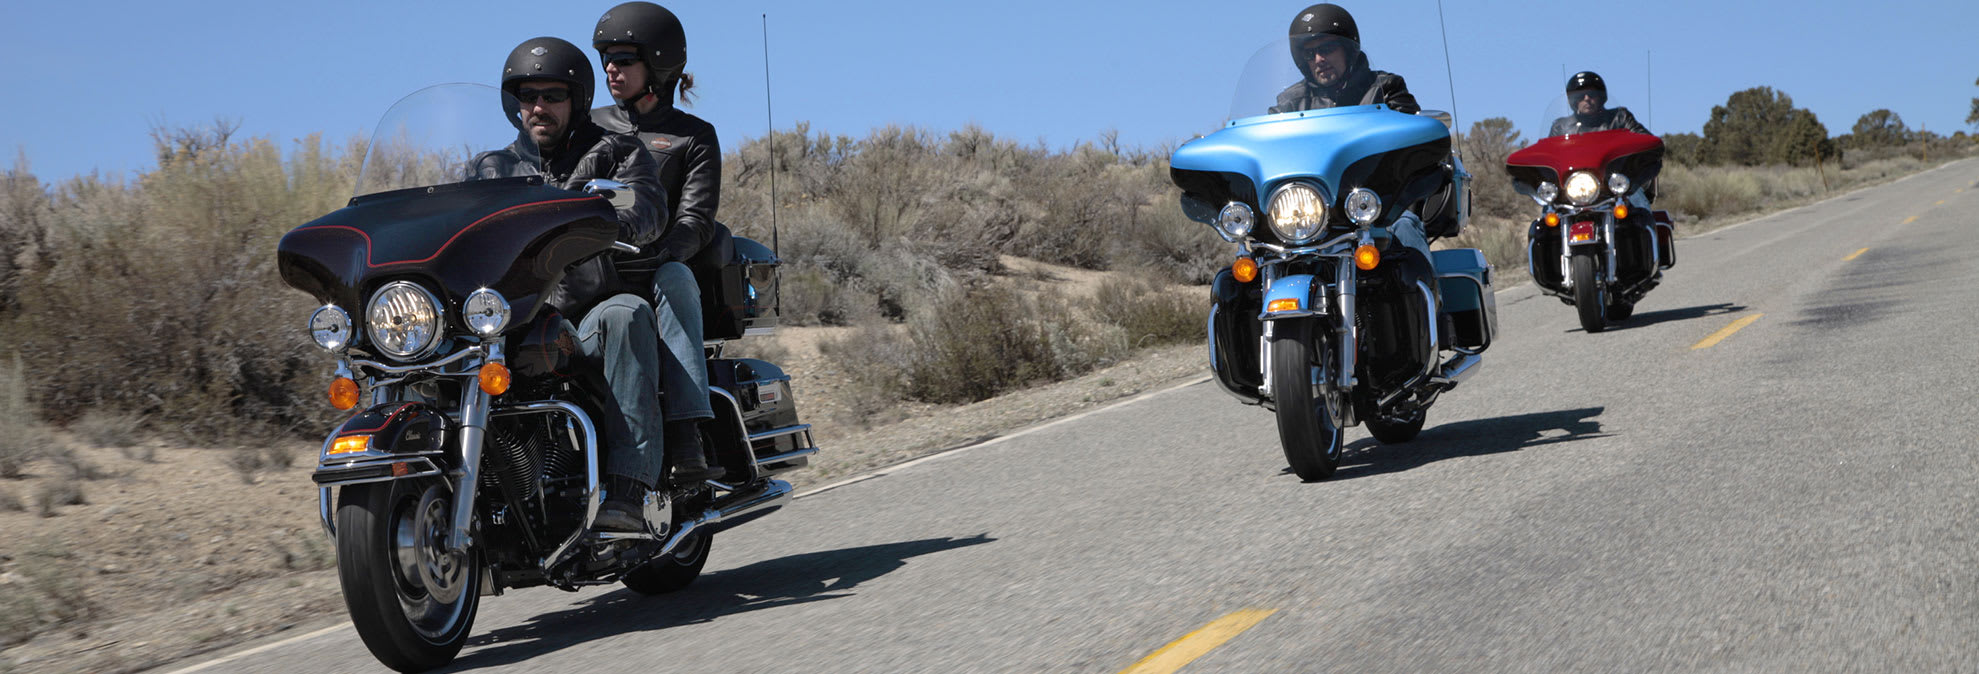 Harley Davidson Recalls Motorcycles Brake Concern Consumer Reports